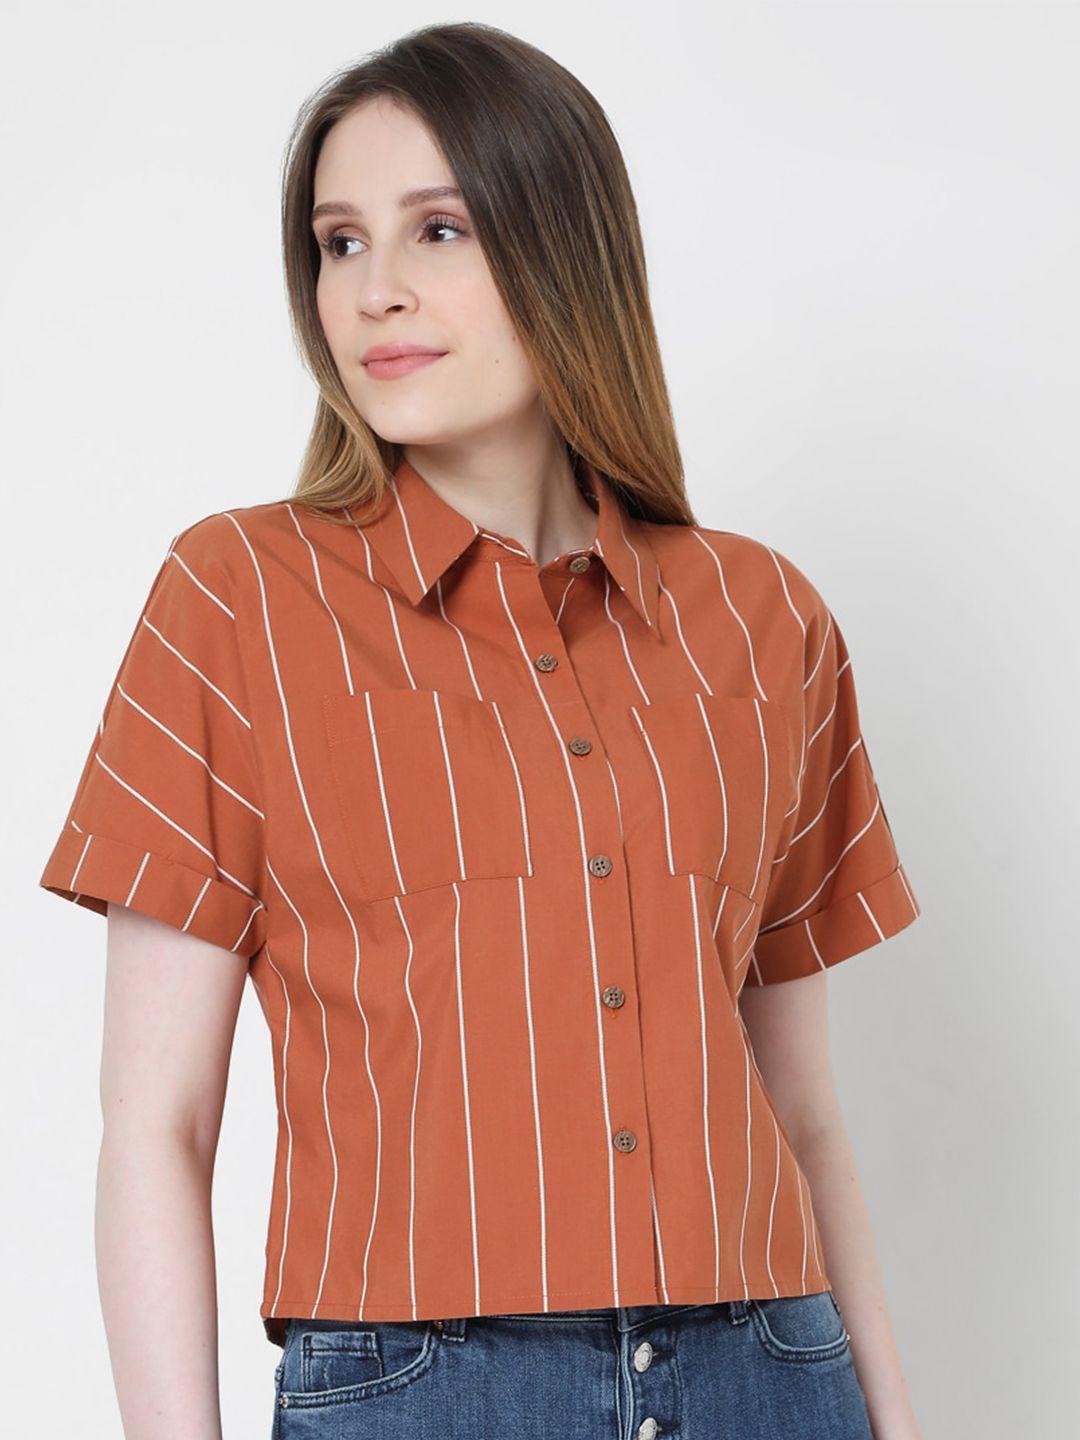 vero moda women brown striped casual shirt